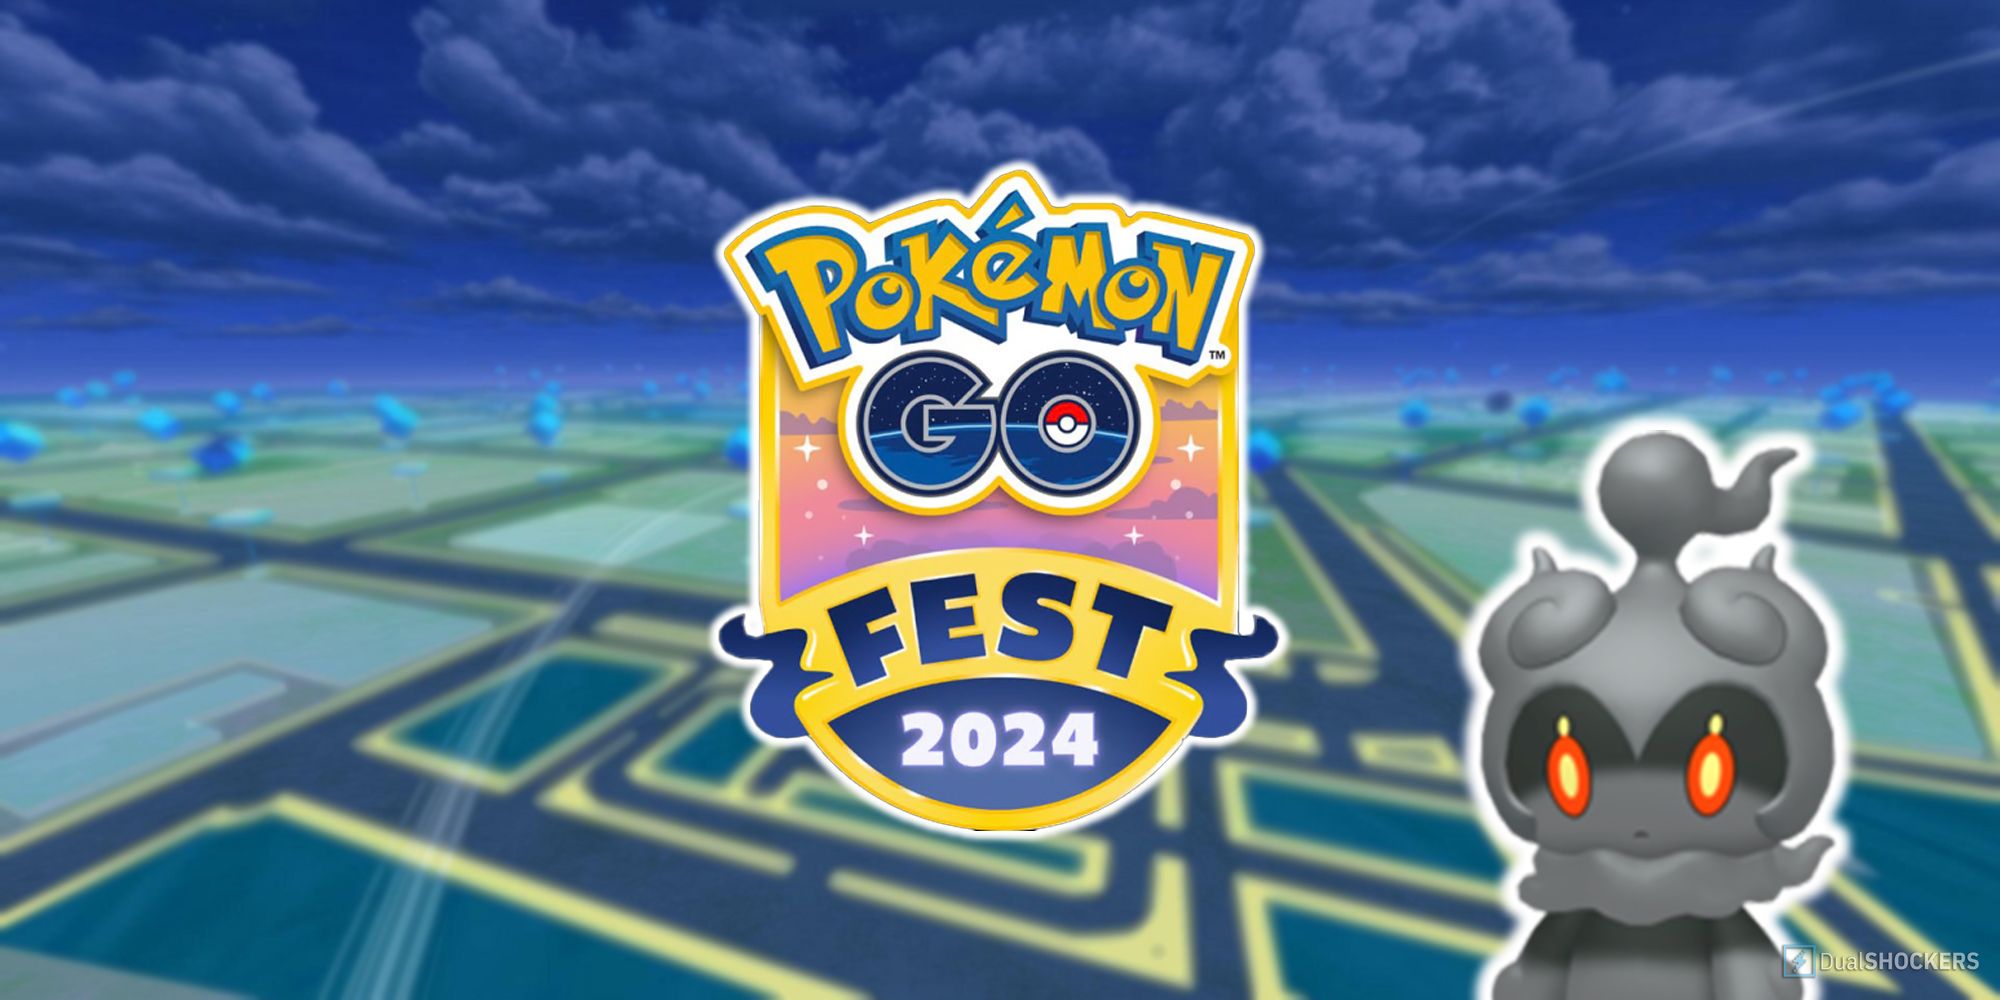 Marshadow and the Pokemon GO Fest 2024 logo.